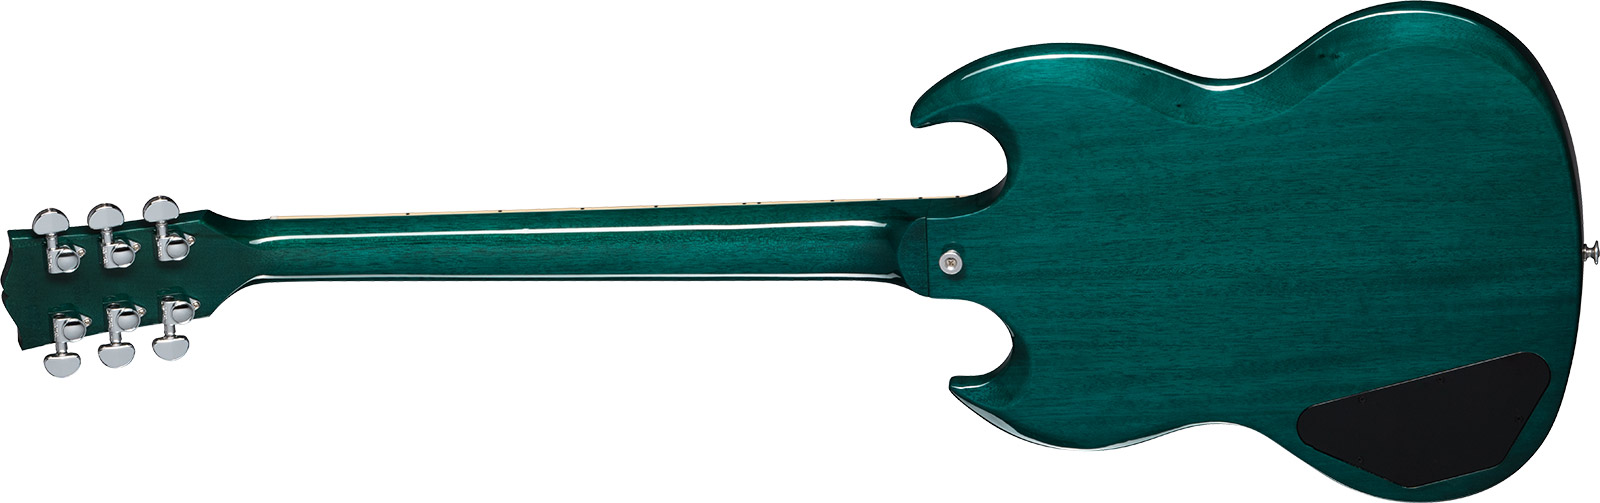 Gibson Sg Standard Custom Color 2h Ht Rw - Translucent Teal - Double Cut E-Gitarre - Variation 1